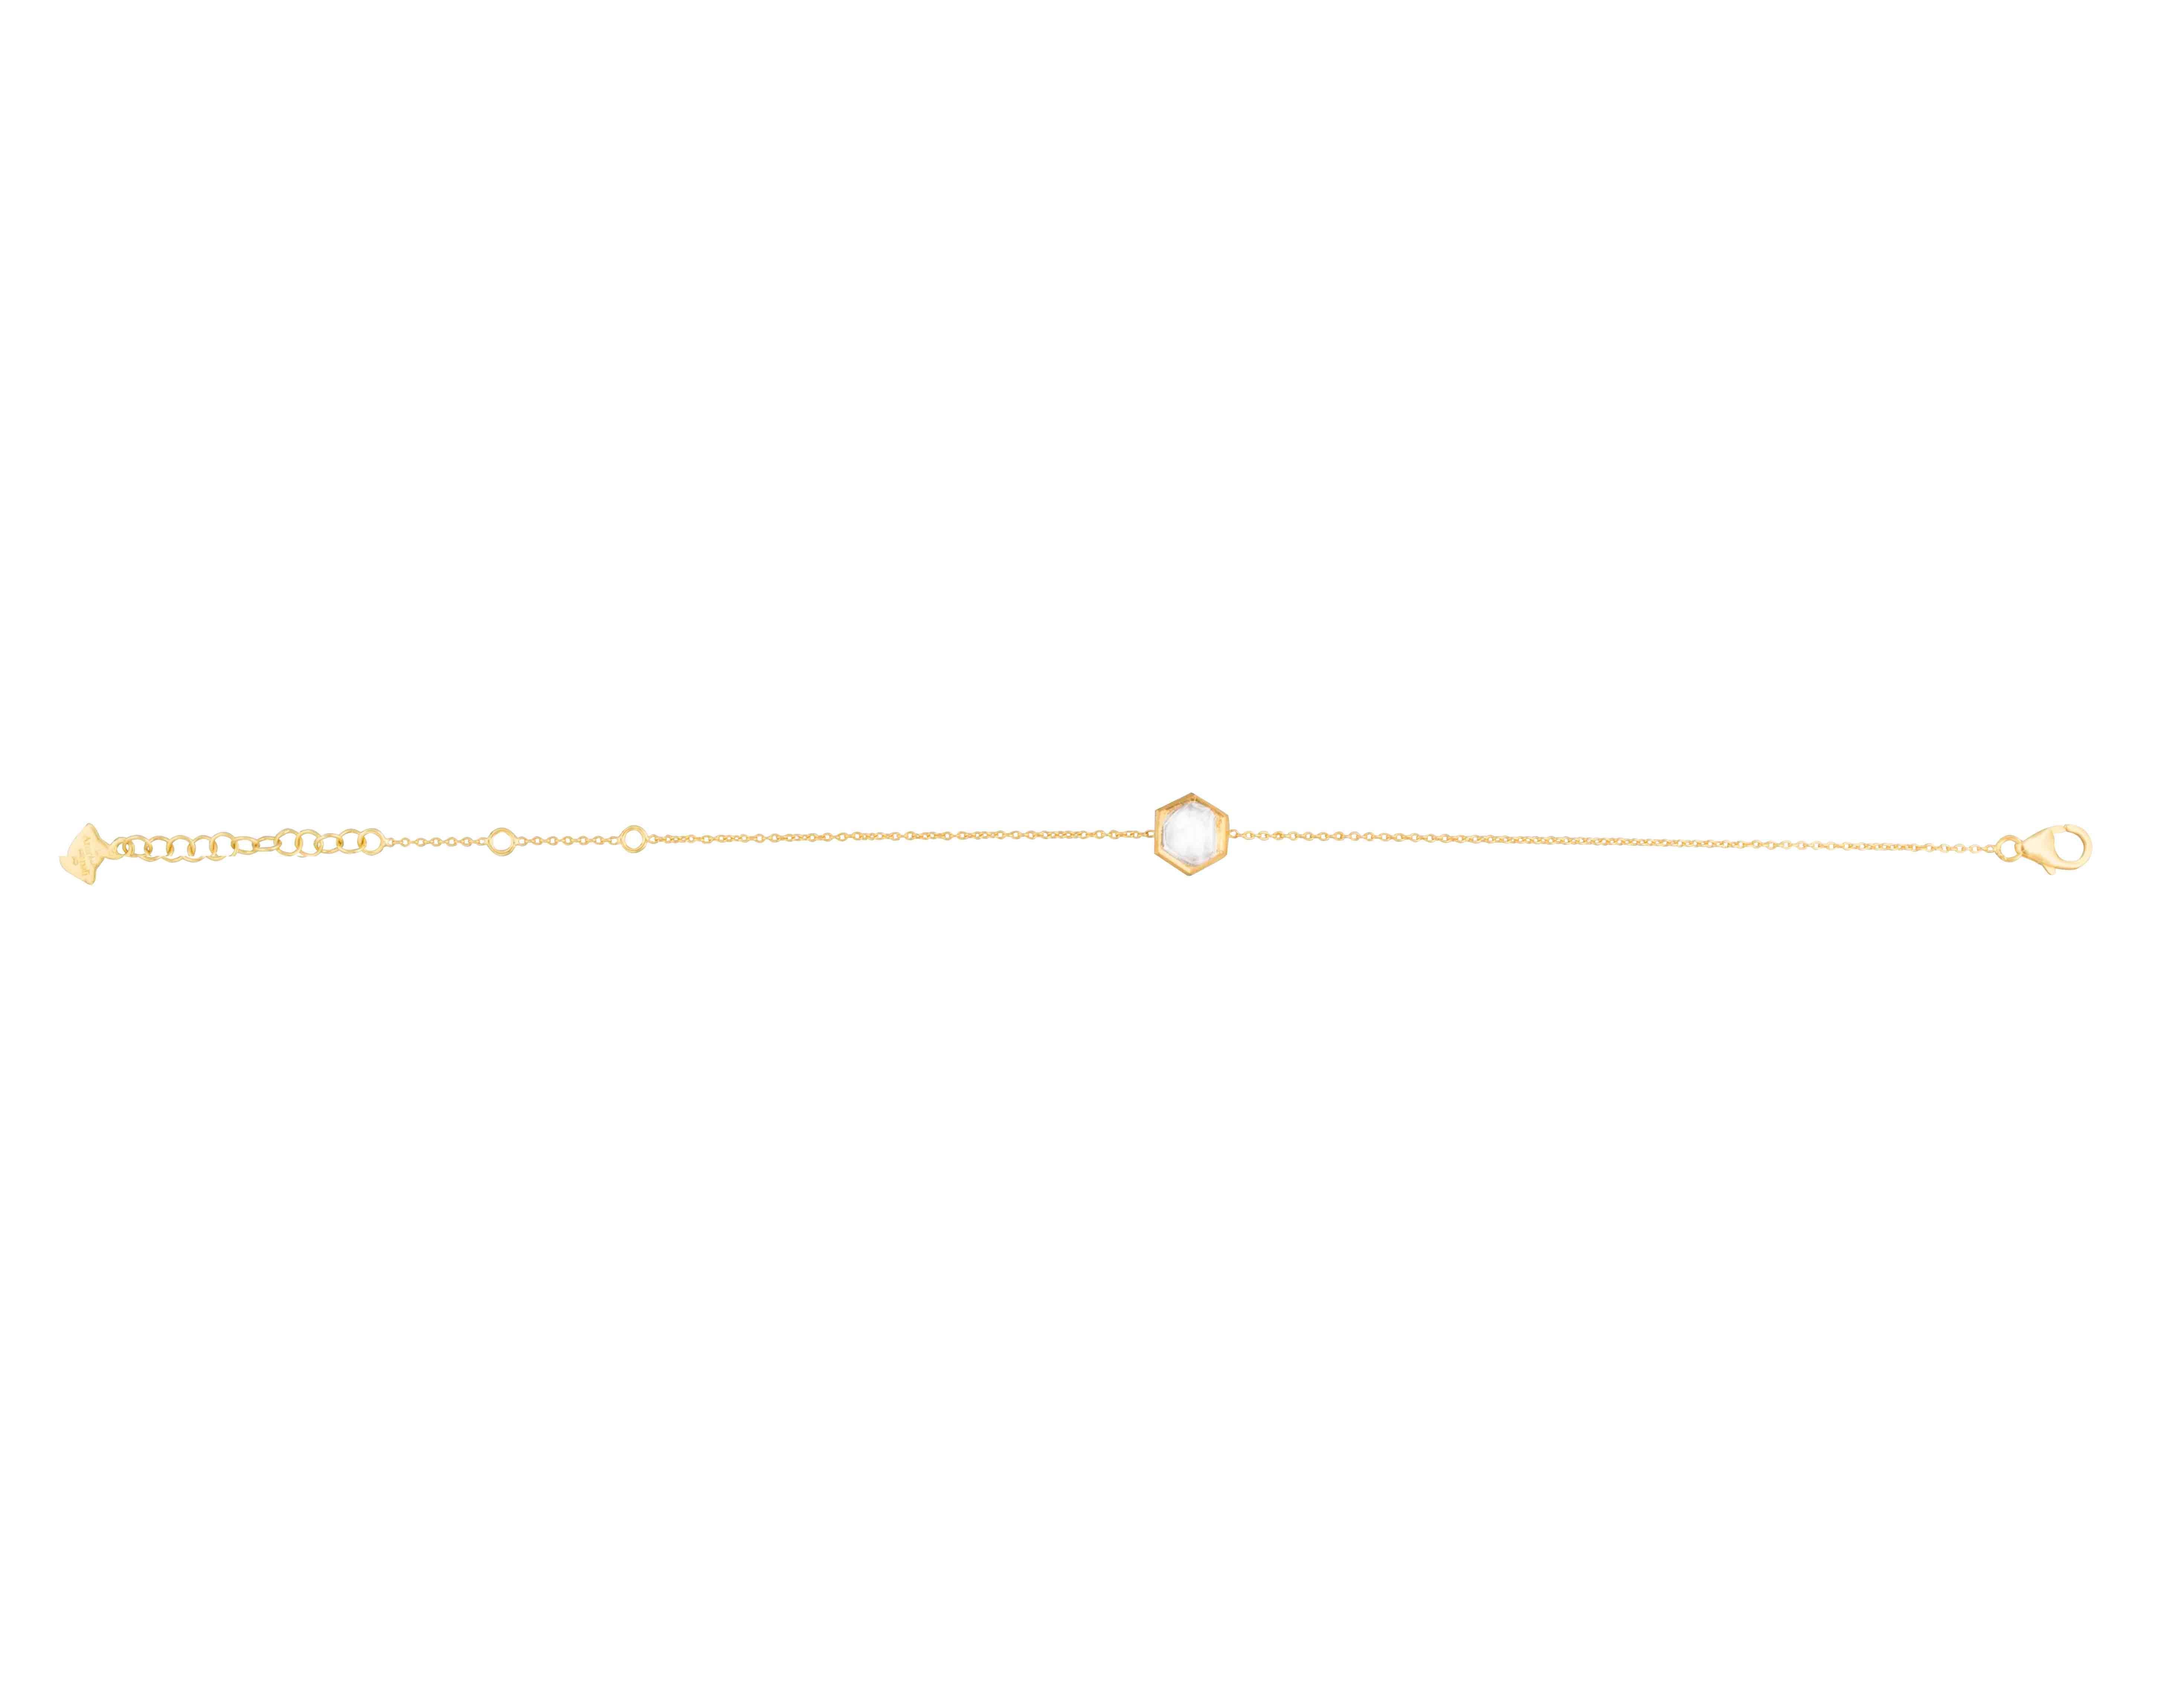 Amrapali Jewels 18k gold and Diamond bracelet  

Diamond weight - 0.042ct

Length - 6-8in